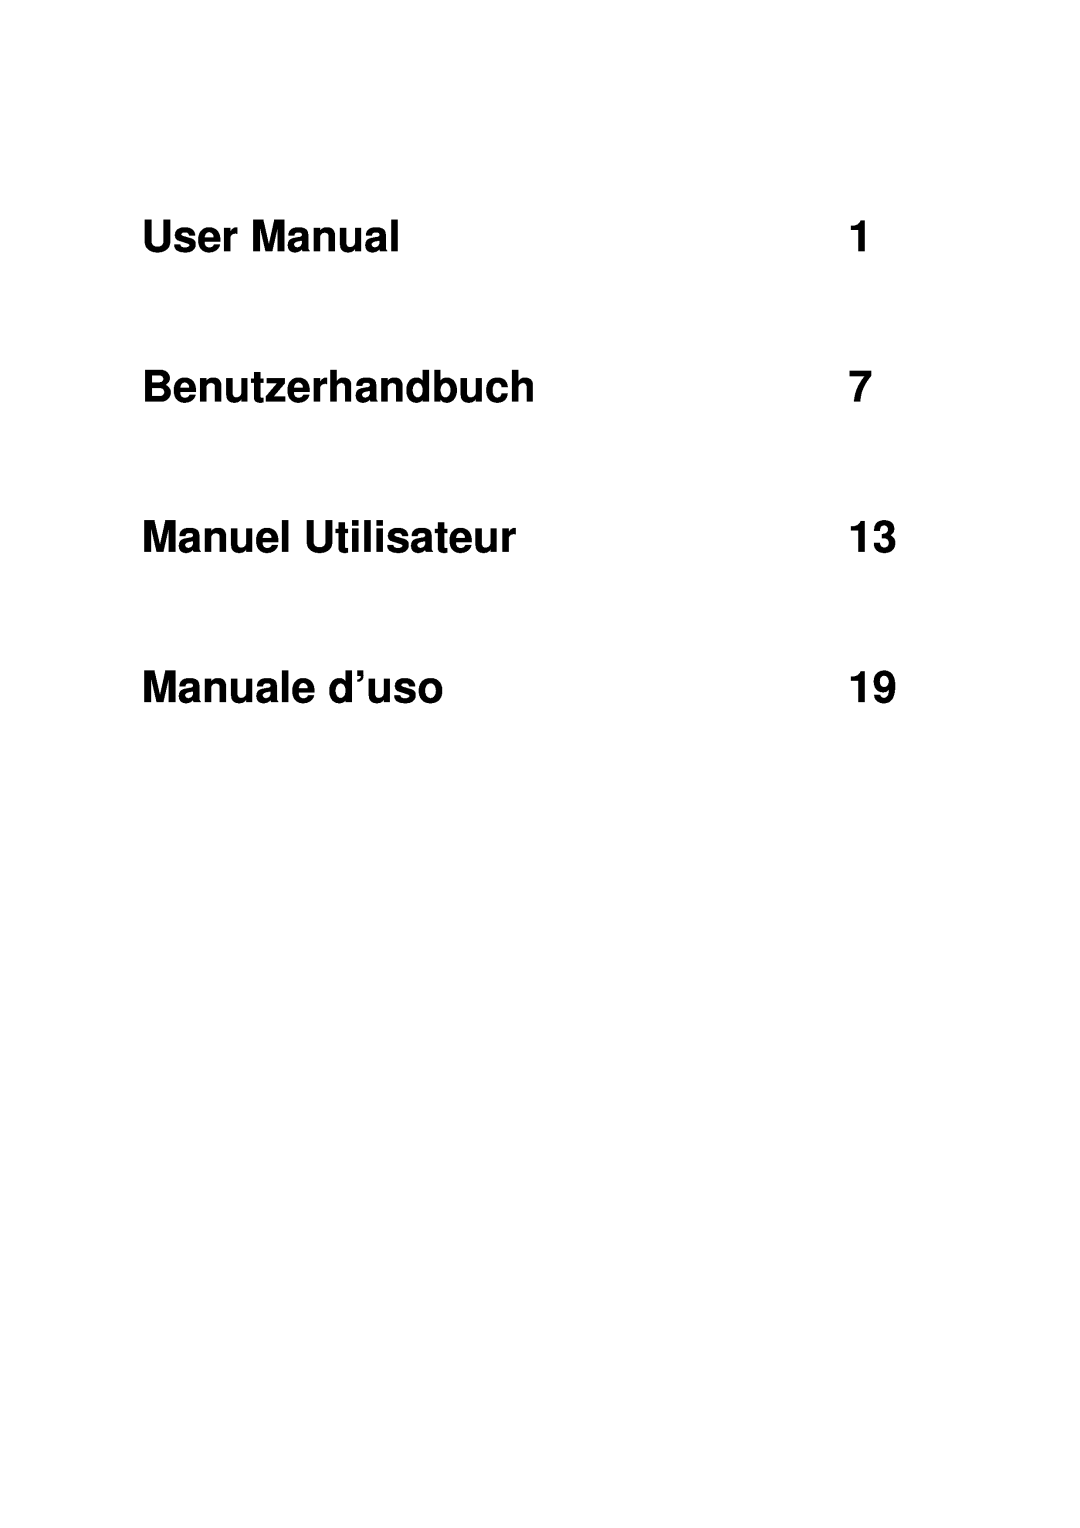 Lindy Smart user manual User Manual, Benutzerhandbuch7, Manuel Utilisateur, Manuale d’uso 